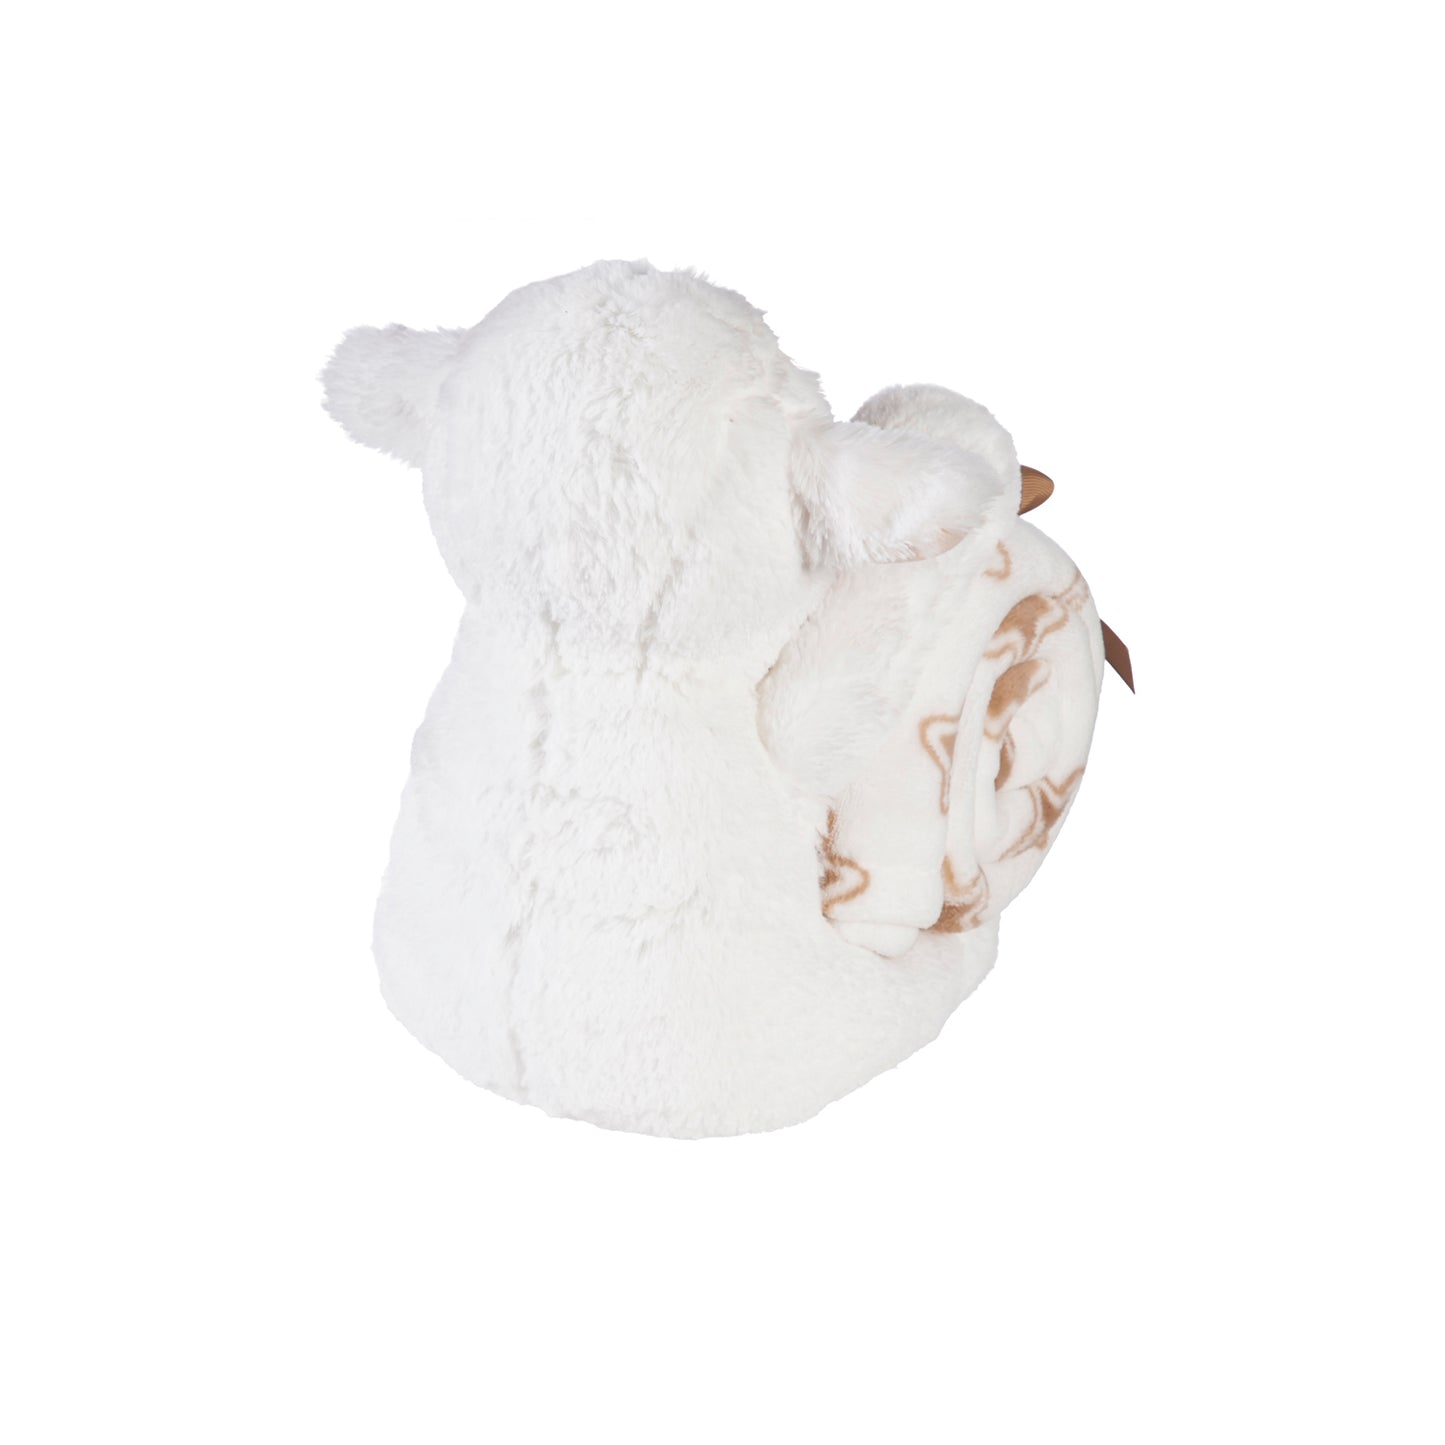 Cuddly Lamb 10" Plush Stuffed Animal w/ Blanket Gift Set, Cream